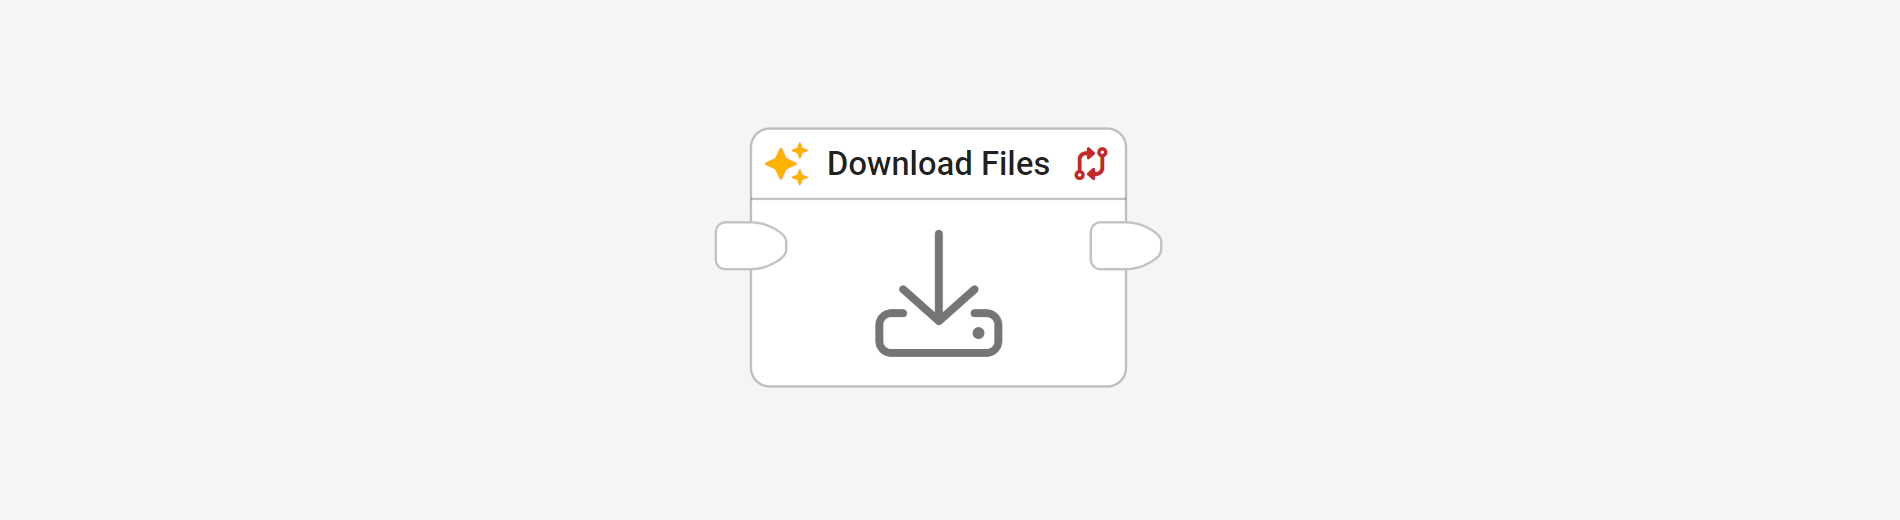 Download Files block in flow editor